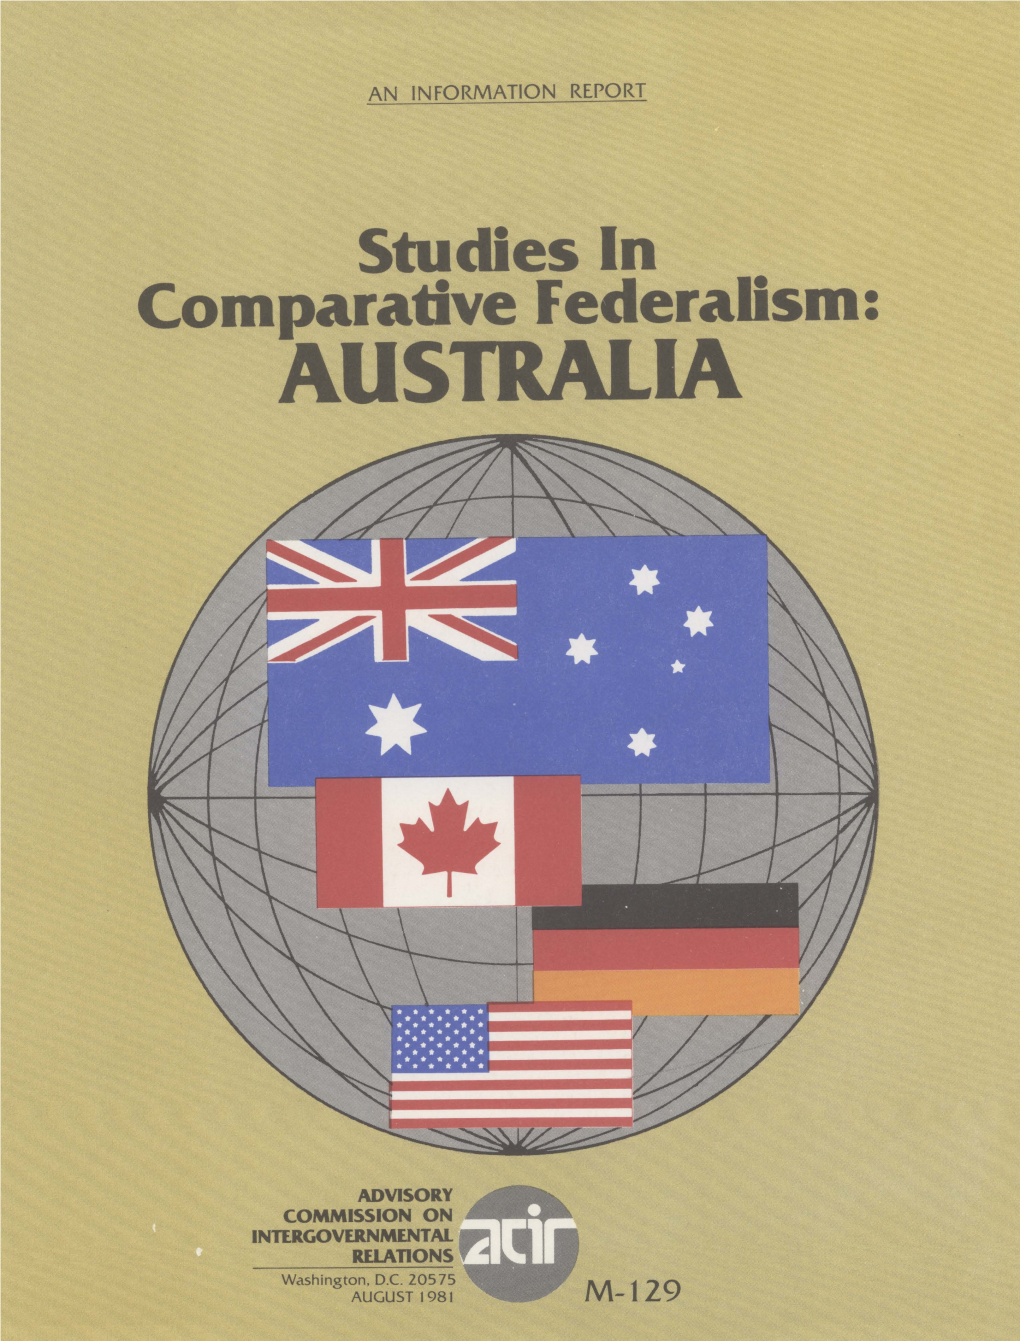 Studies in Comparative Federalism: AUSTRALIA